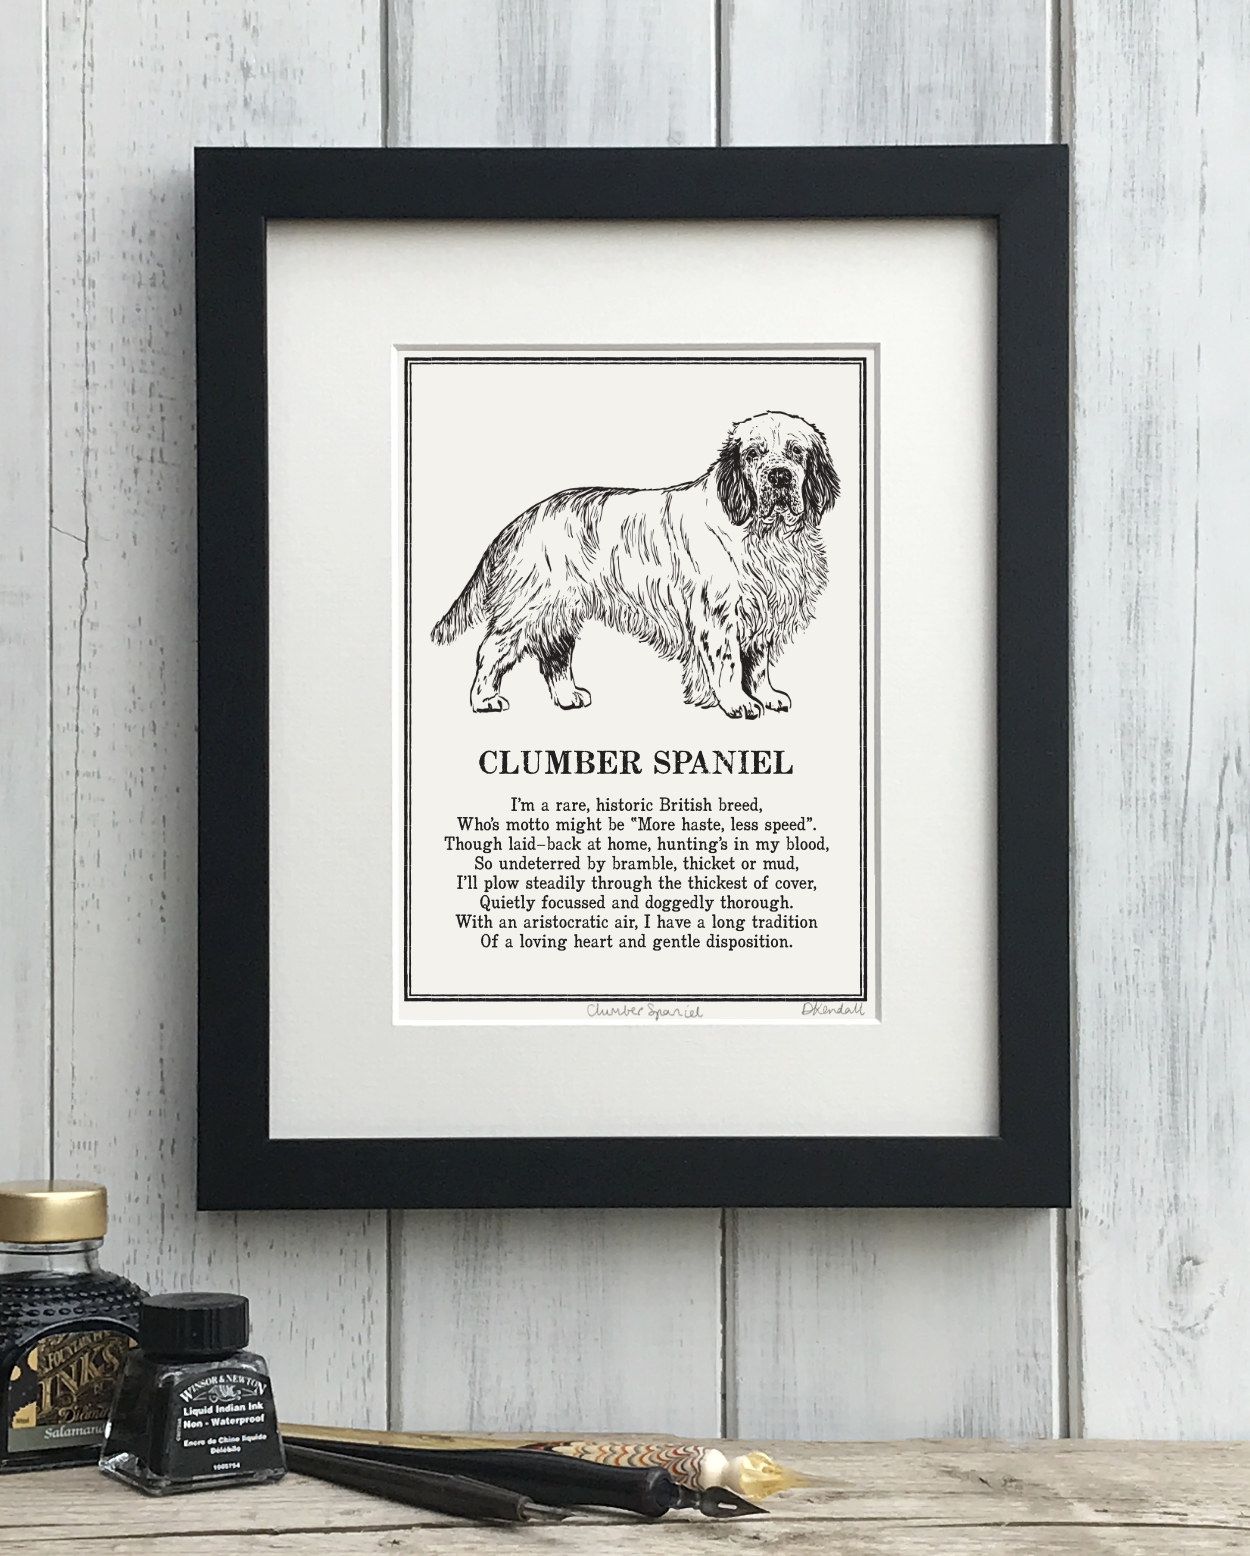 Clumber Spaniel Doggerel Illustrated Poem Art Print | The Enlightened Hound